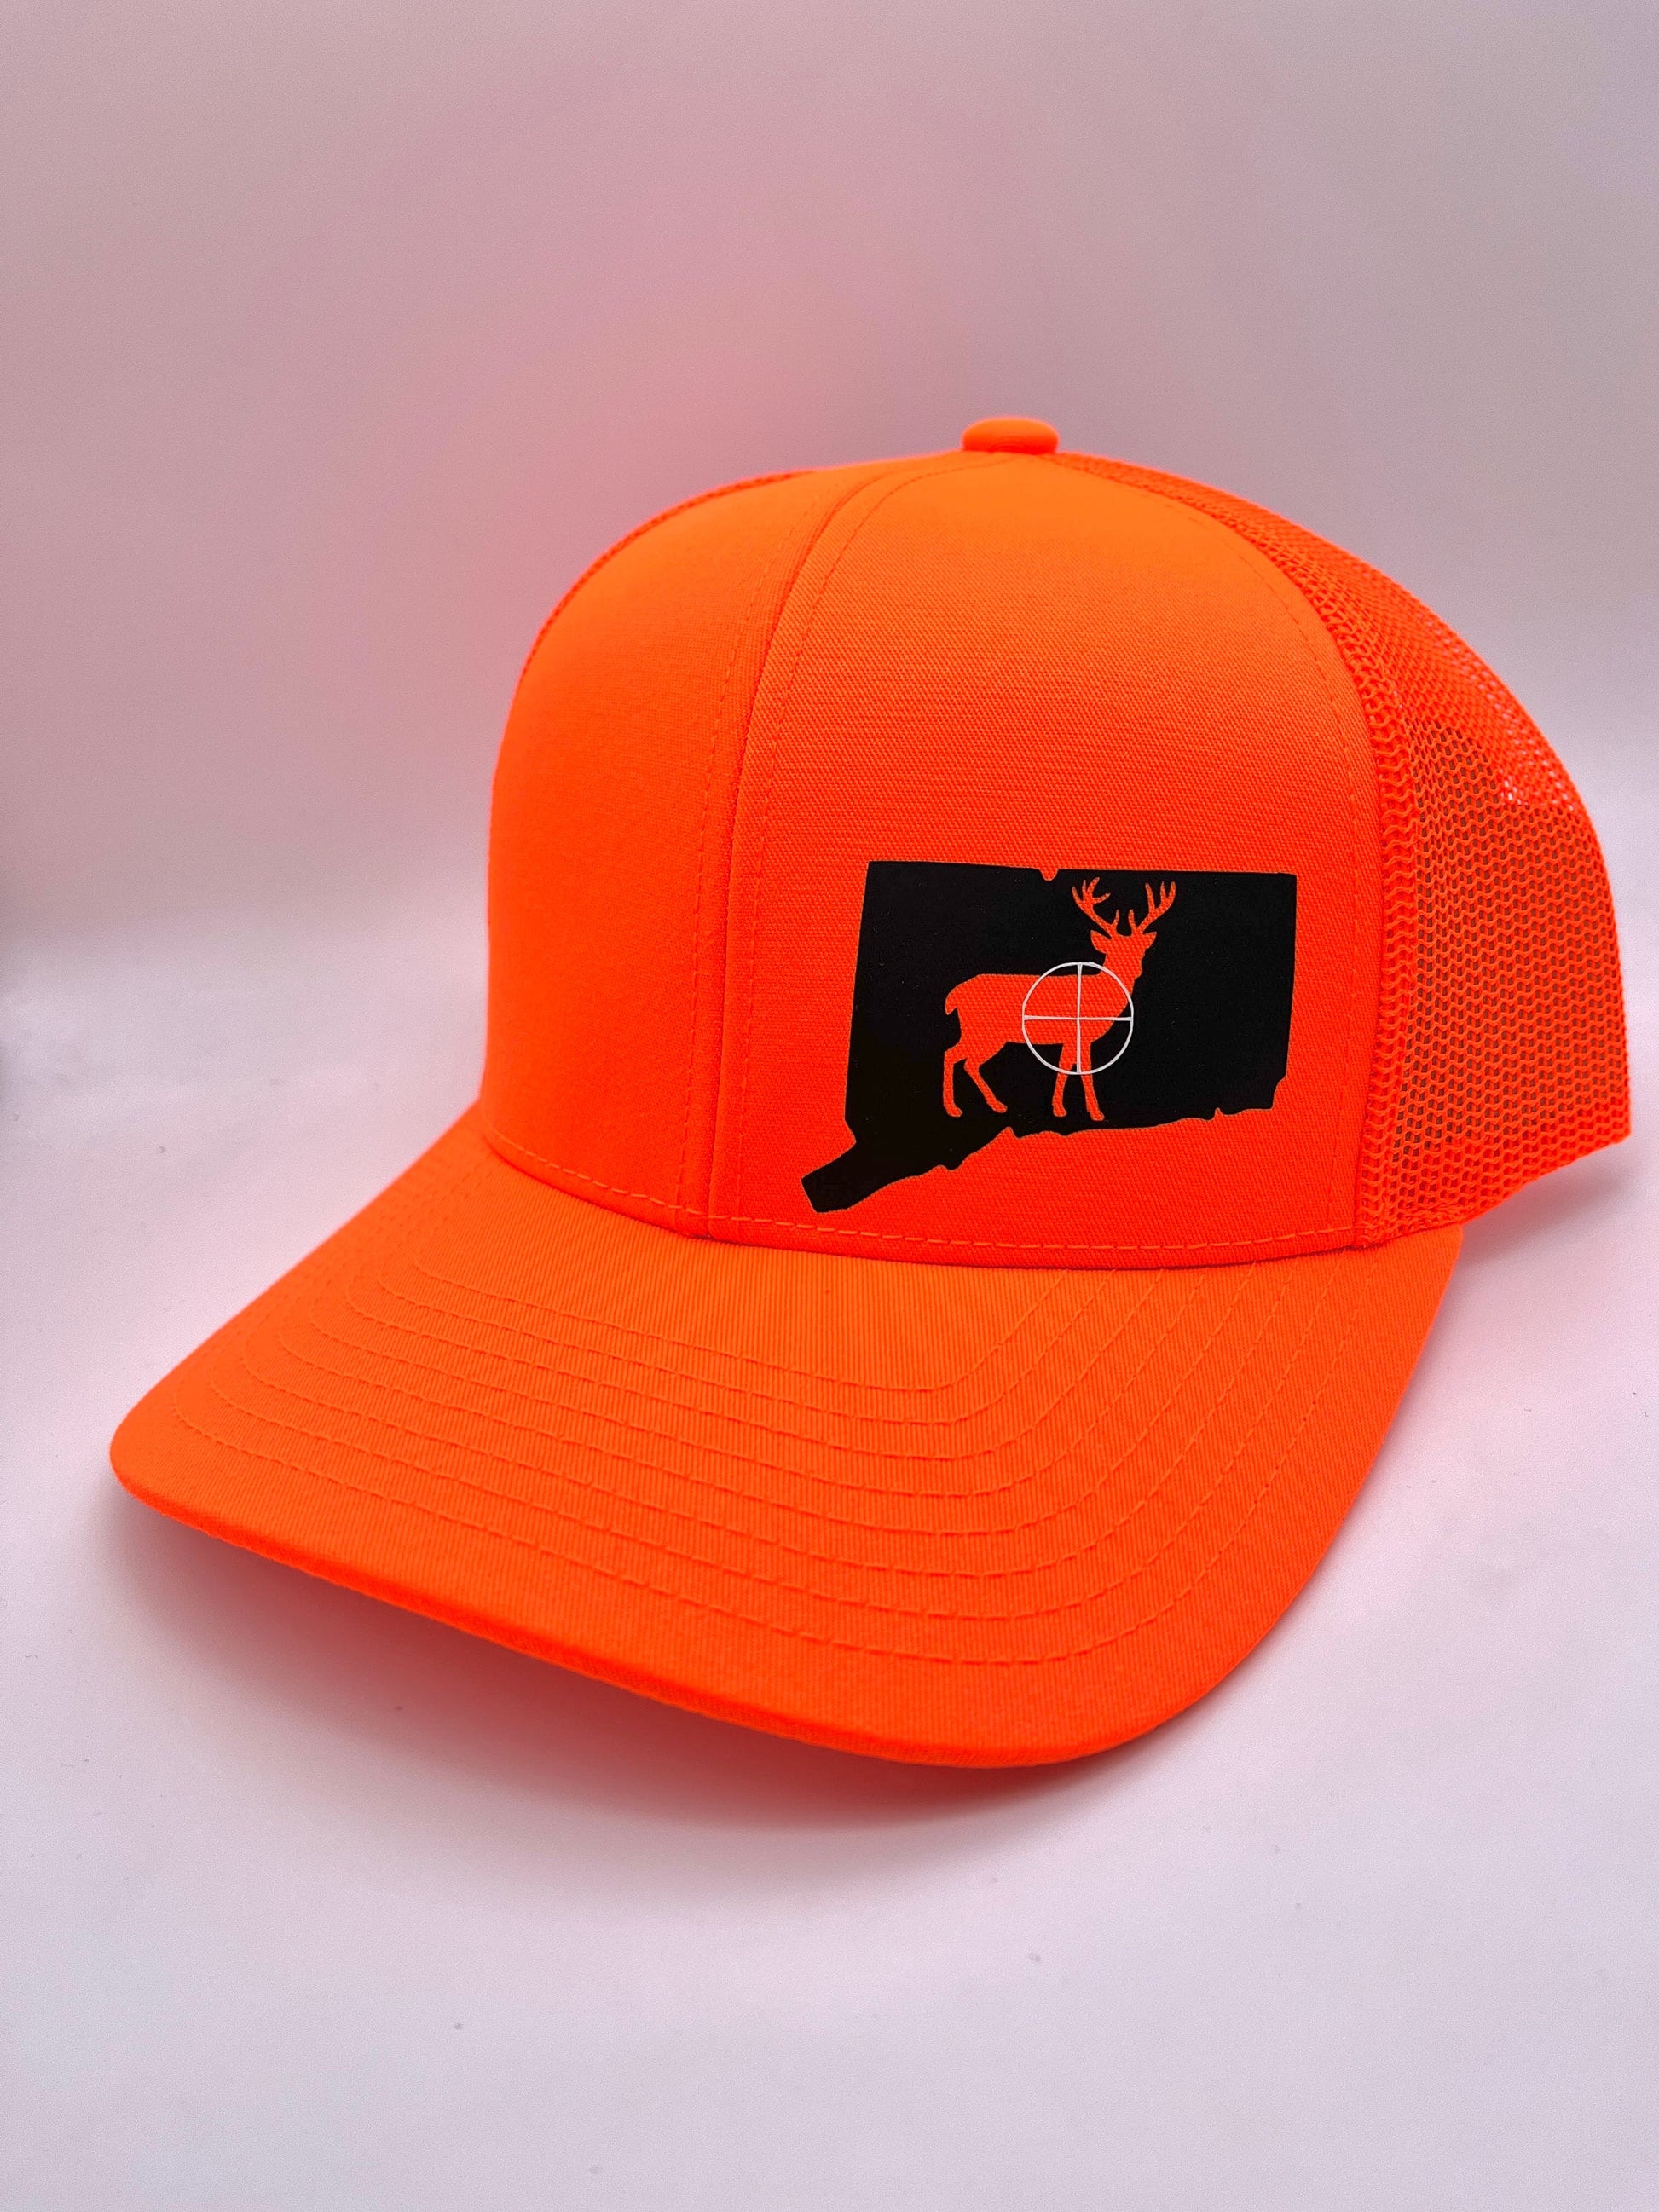 Any State Deer Hunting Firearm Blaze Orange or Charcoal/Neon Orange Snap Back Hat